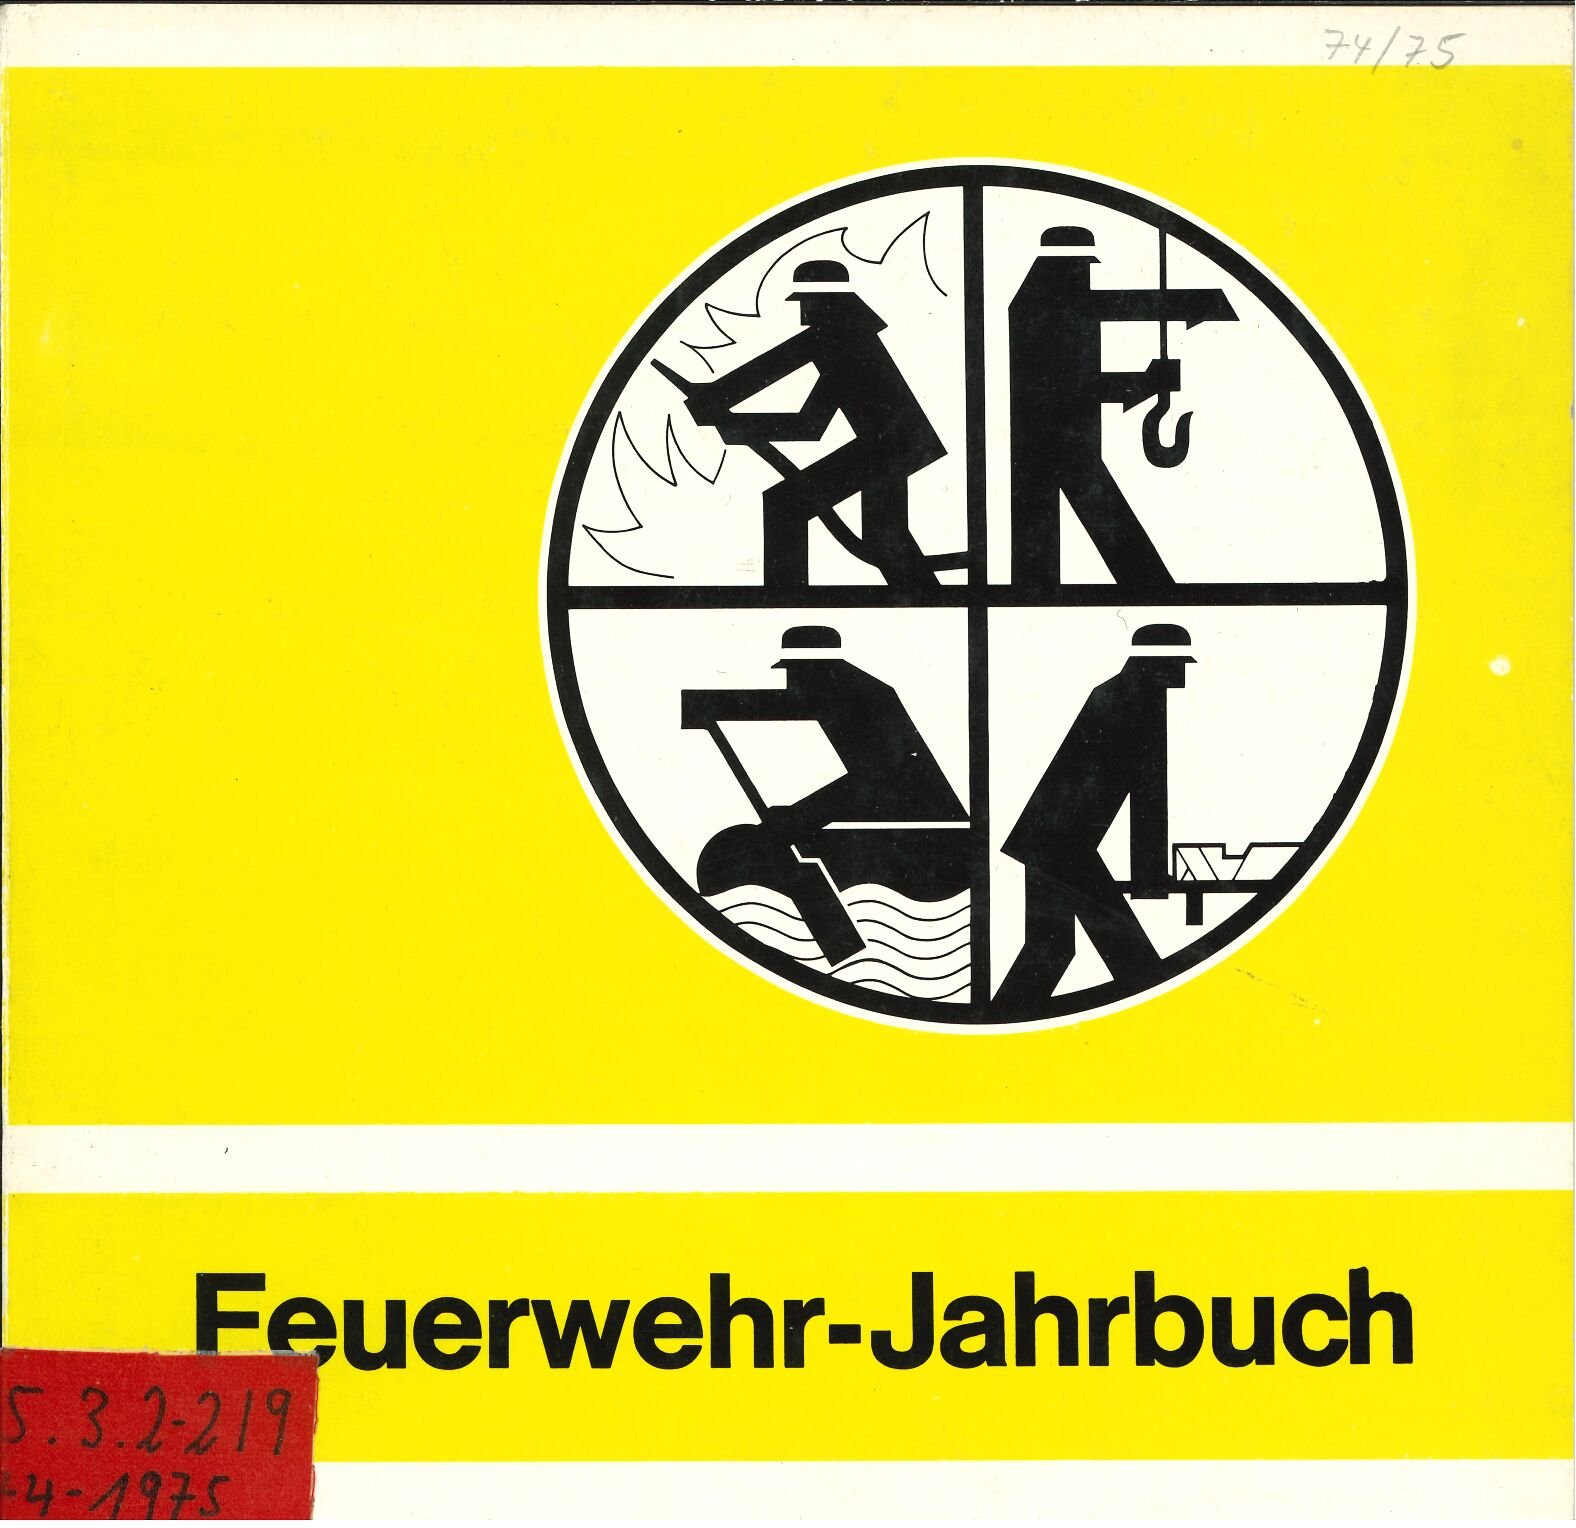 Feuerwehr-Jahrbuch 1974/75 (Feuerwehrmuseum Grethen CC BY-NC-SA)